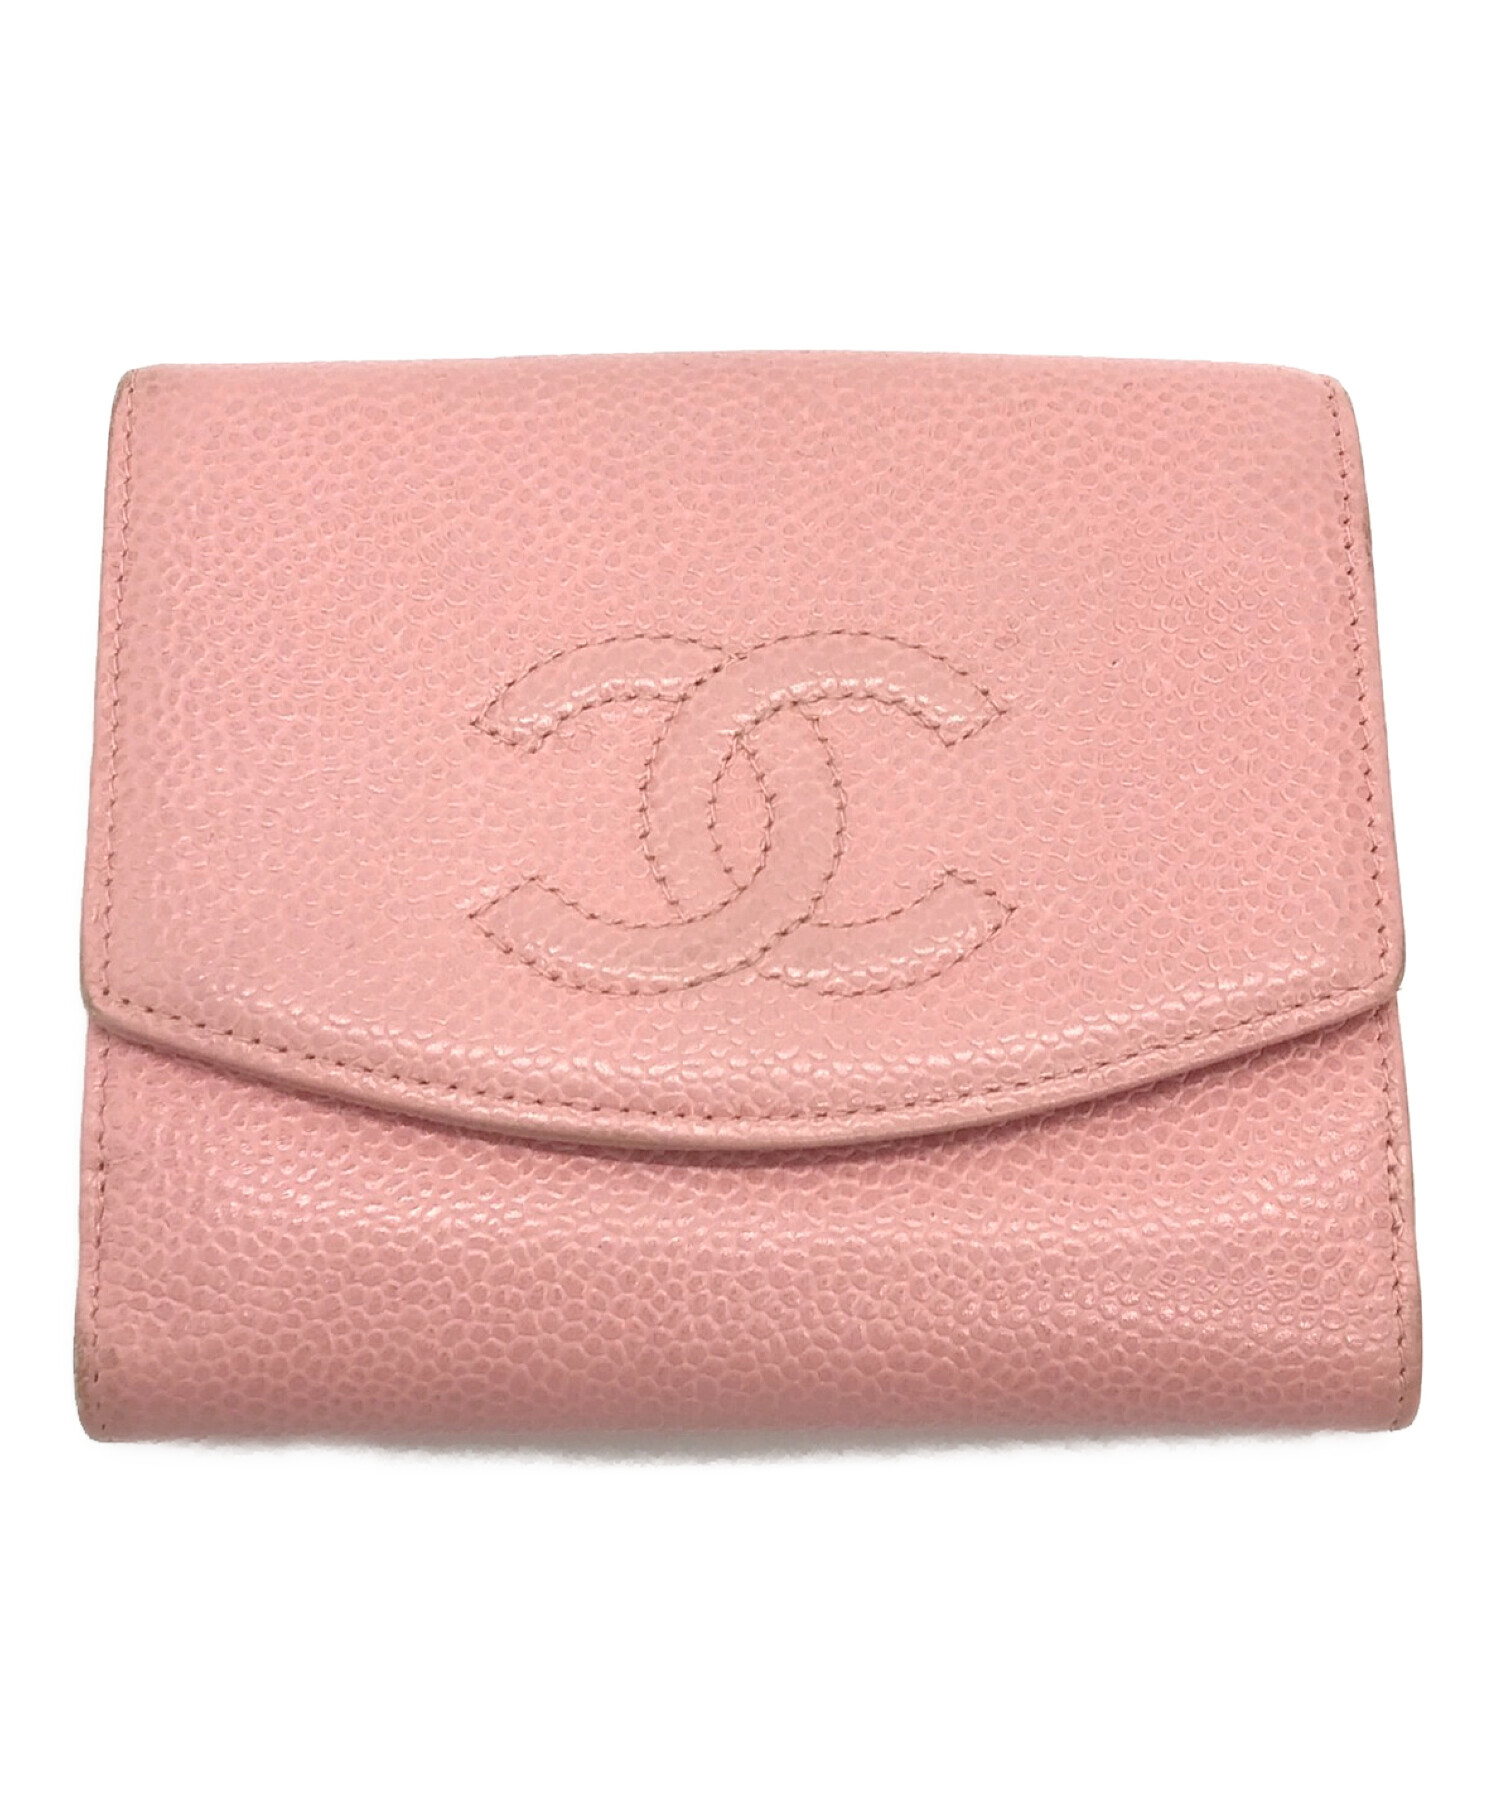 CHANEL シャネル ココマーク キャビアスキン 二つ折り財布 ピンク約10cm横